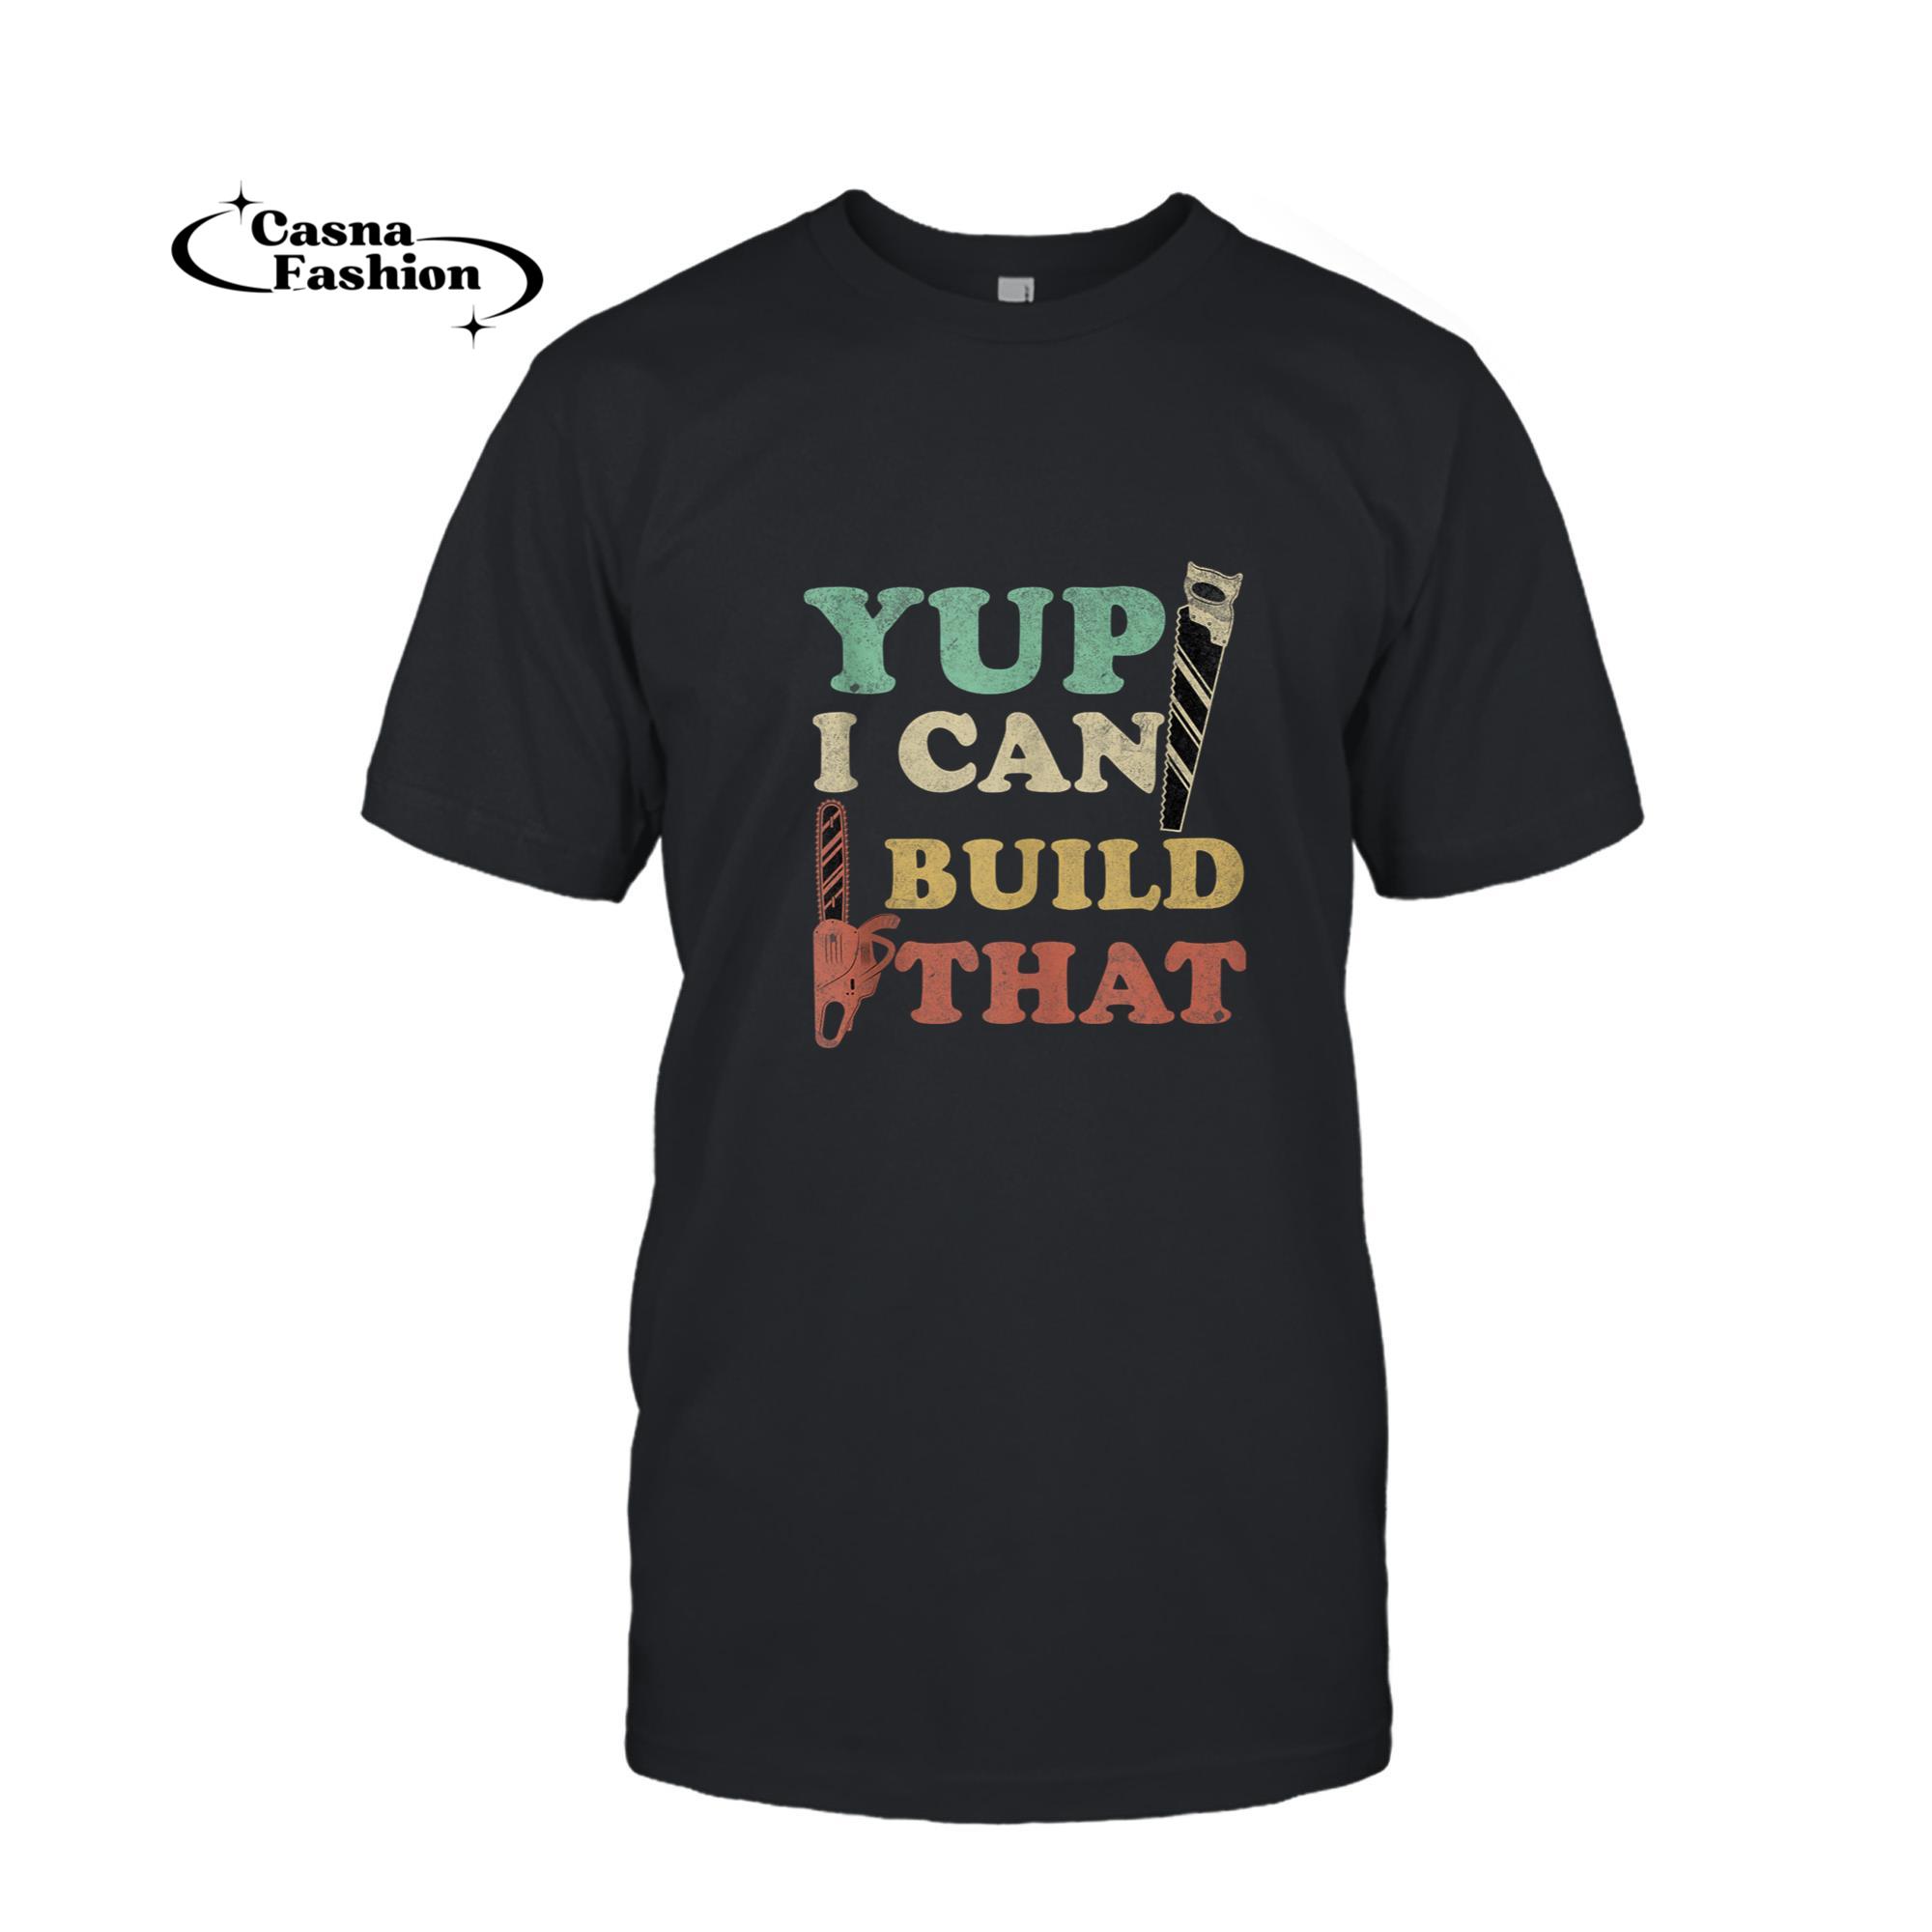 casnafashion_T-shirt_Yup I Can Build That Funny Carpenter Tank Top_T-shirt_Black